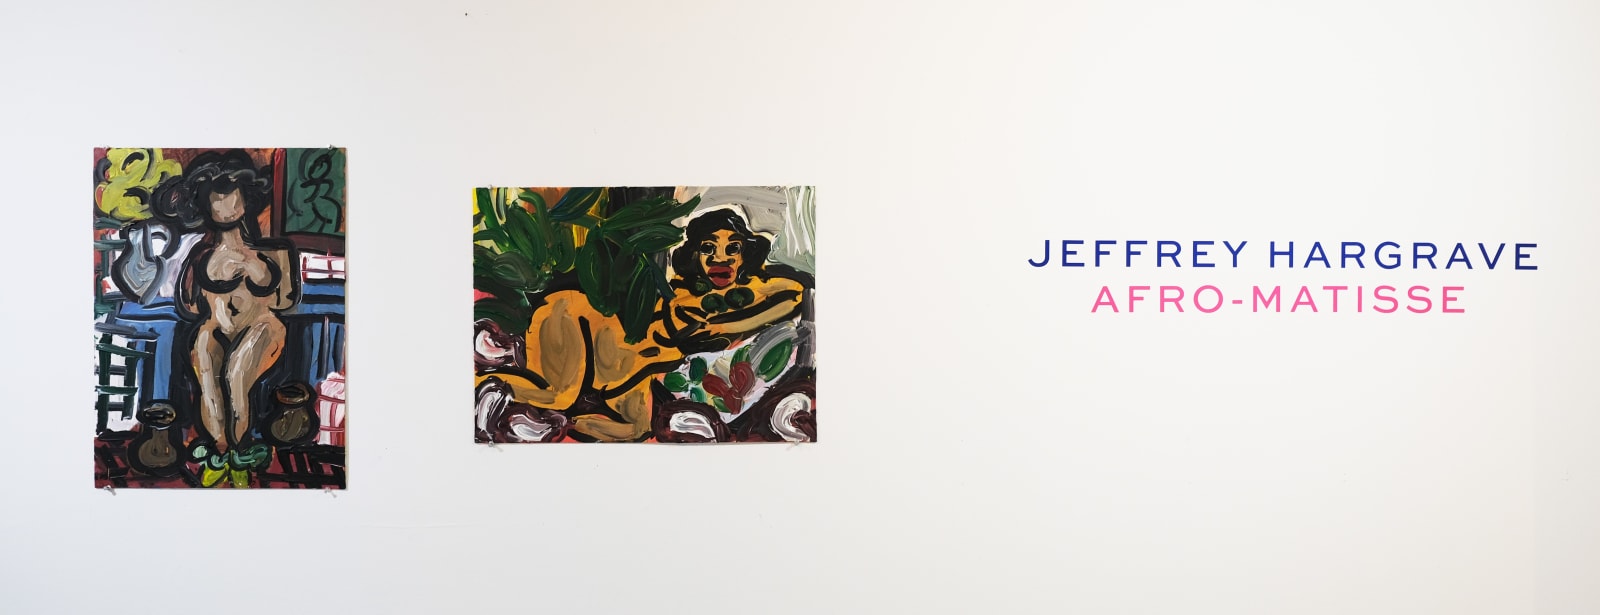 Jeffrey Hargrave: Afro-Matisse